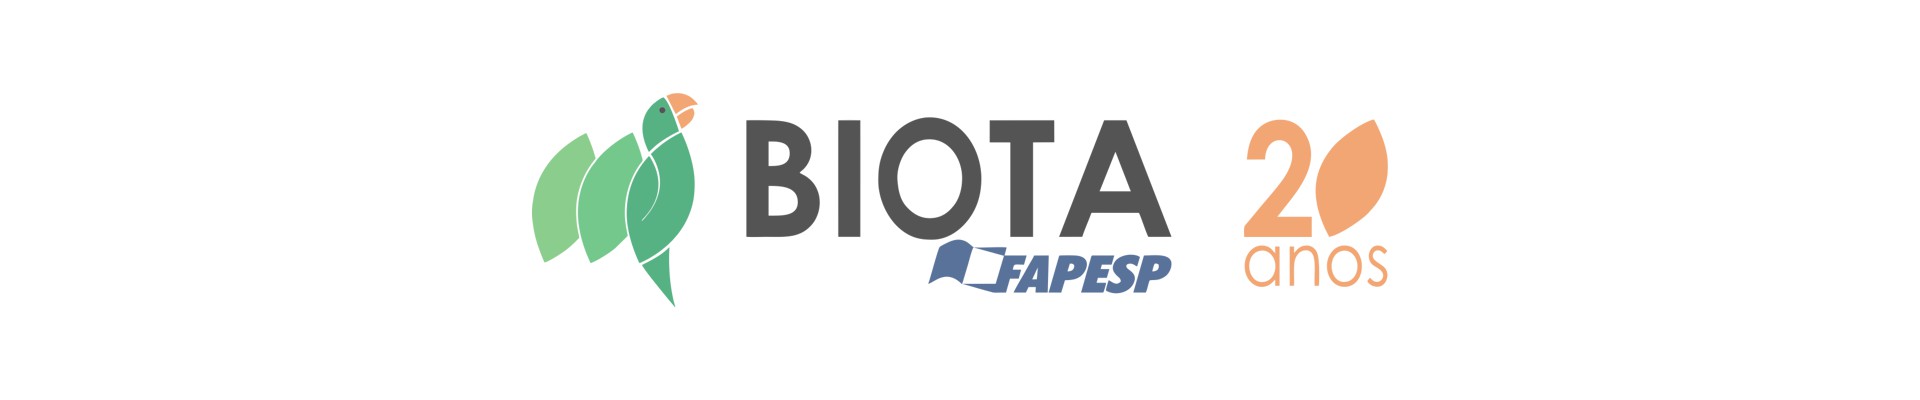 Logotipo de Biota / FAPESP 20 años